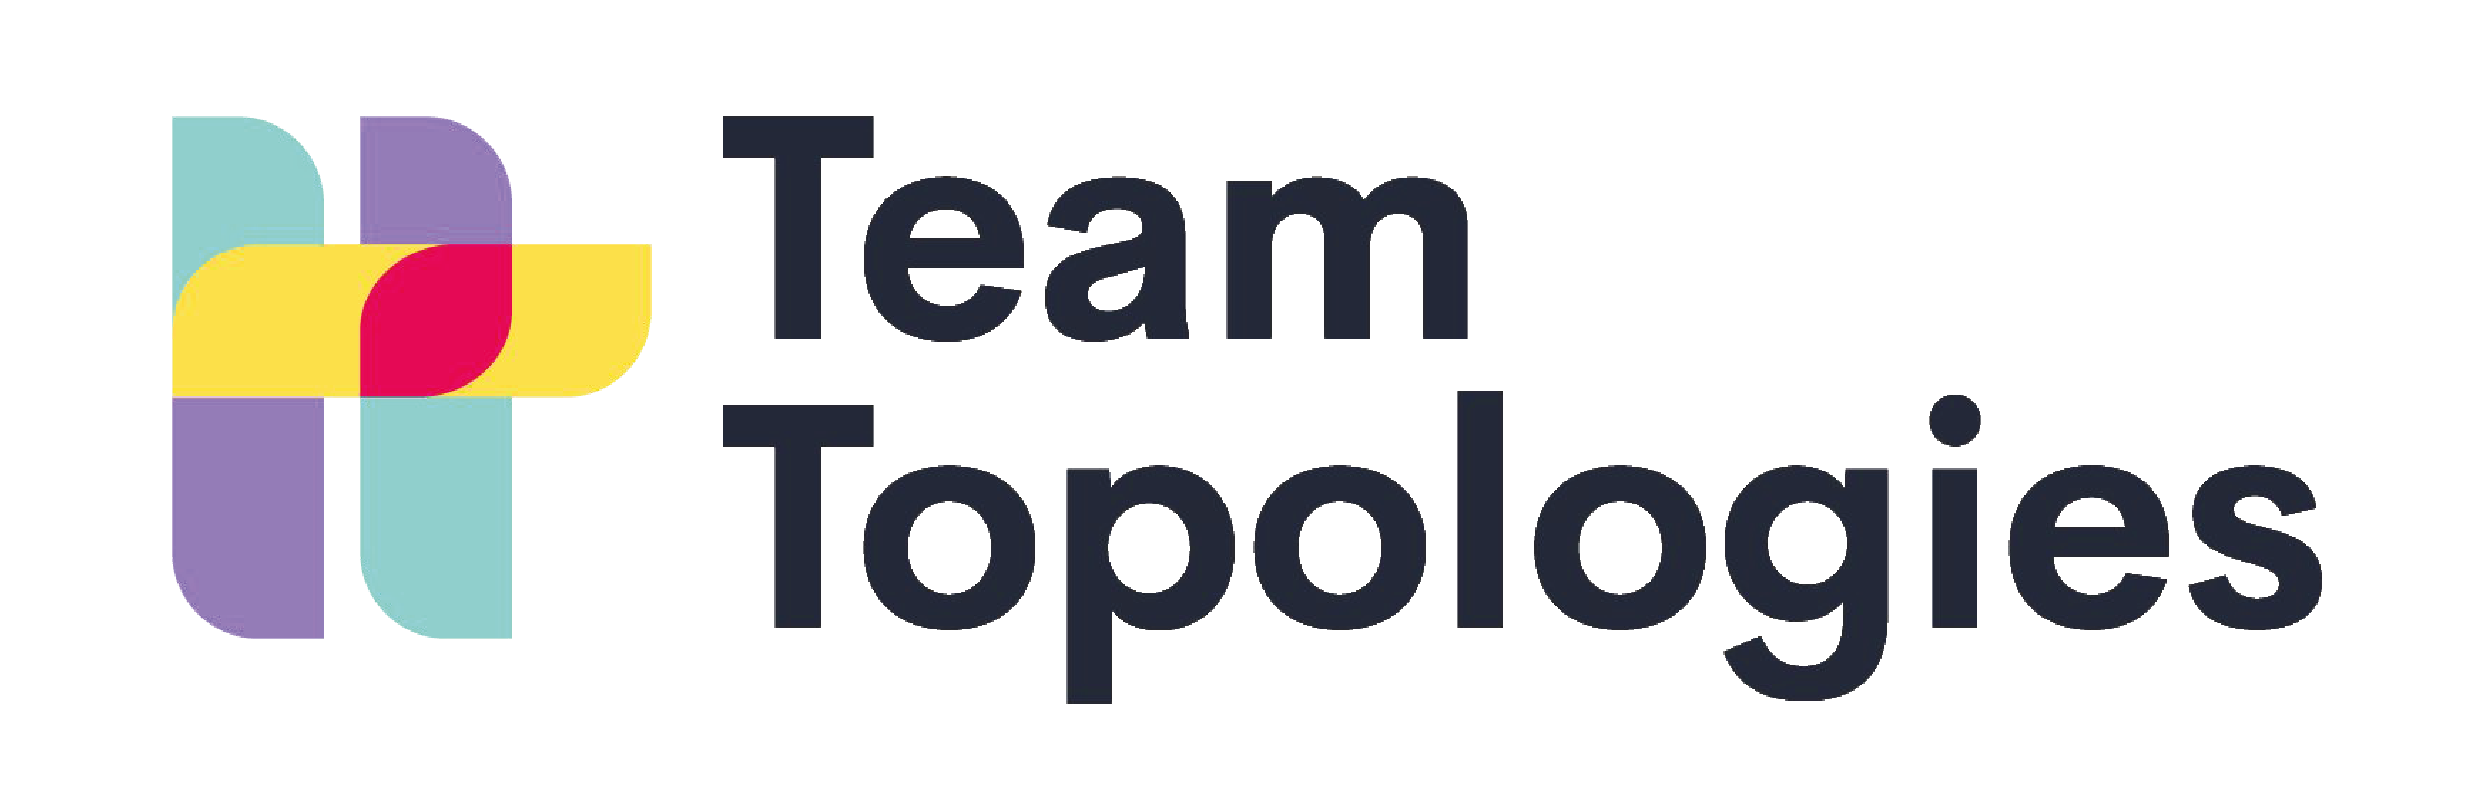 Team Typologies logo-01.png__PID:d10567e7-6af2-45b9-a409-8cd665888144